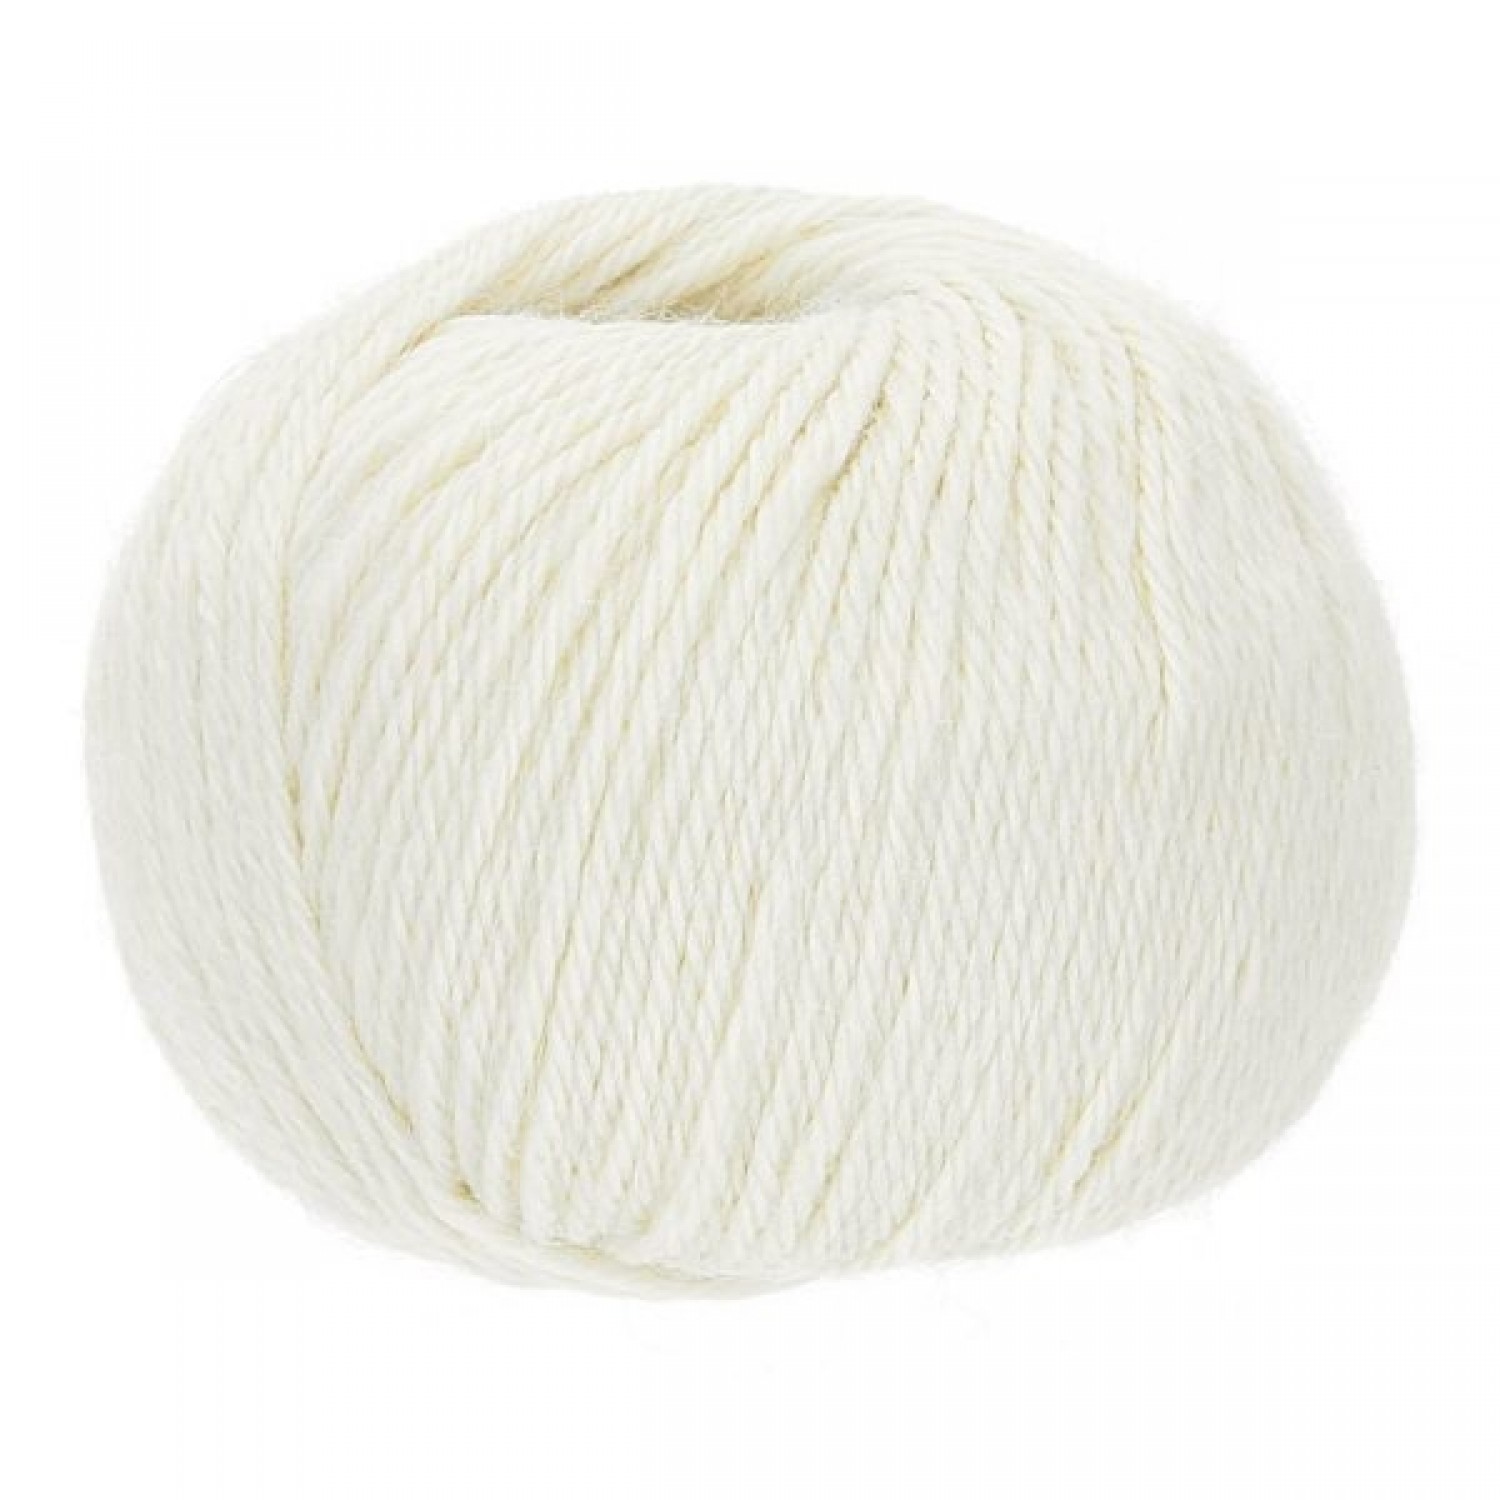 Baby Alpaca-Soft knit crochet yarn, 50g Nature | Apu Kuntur